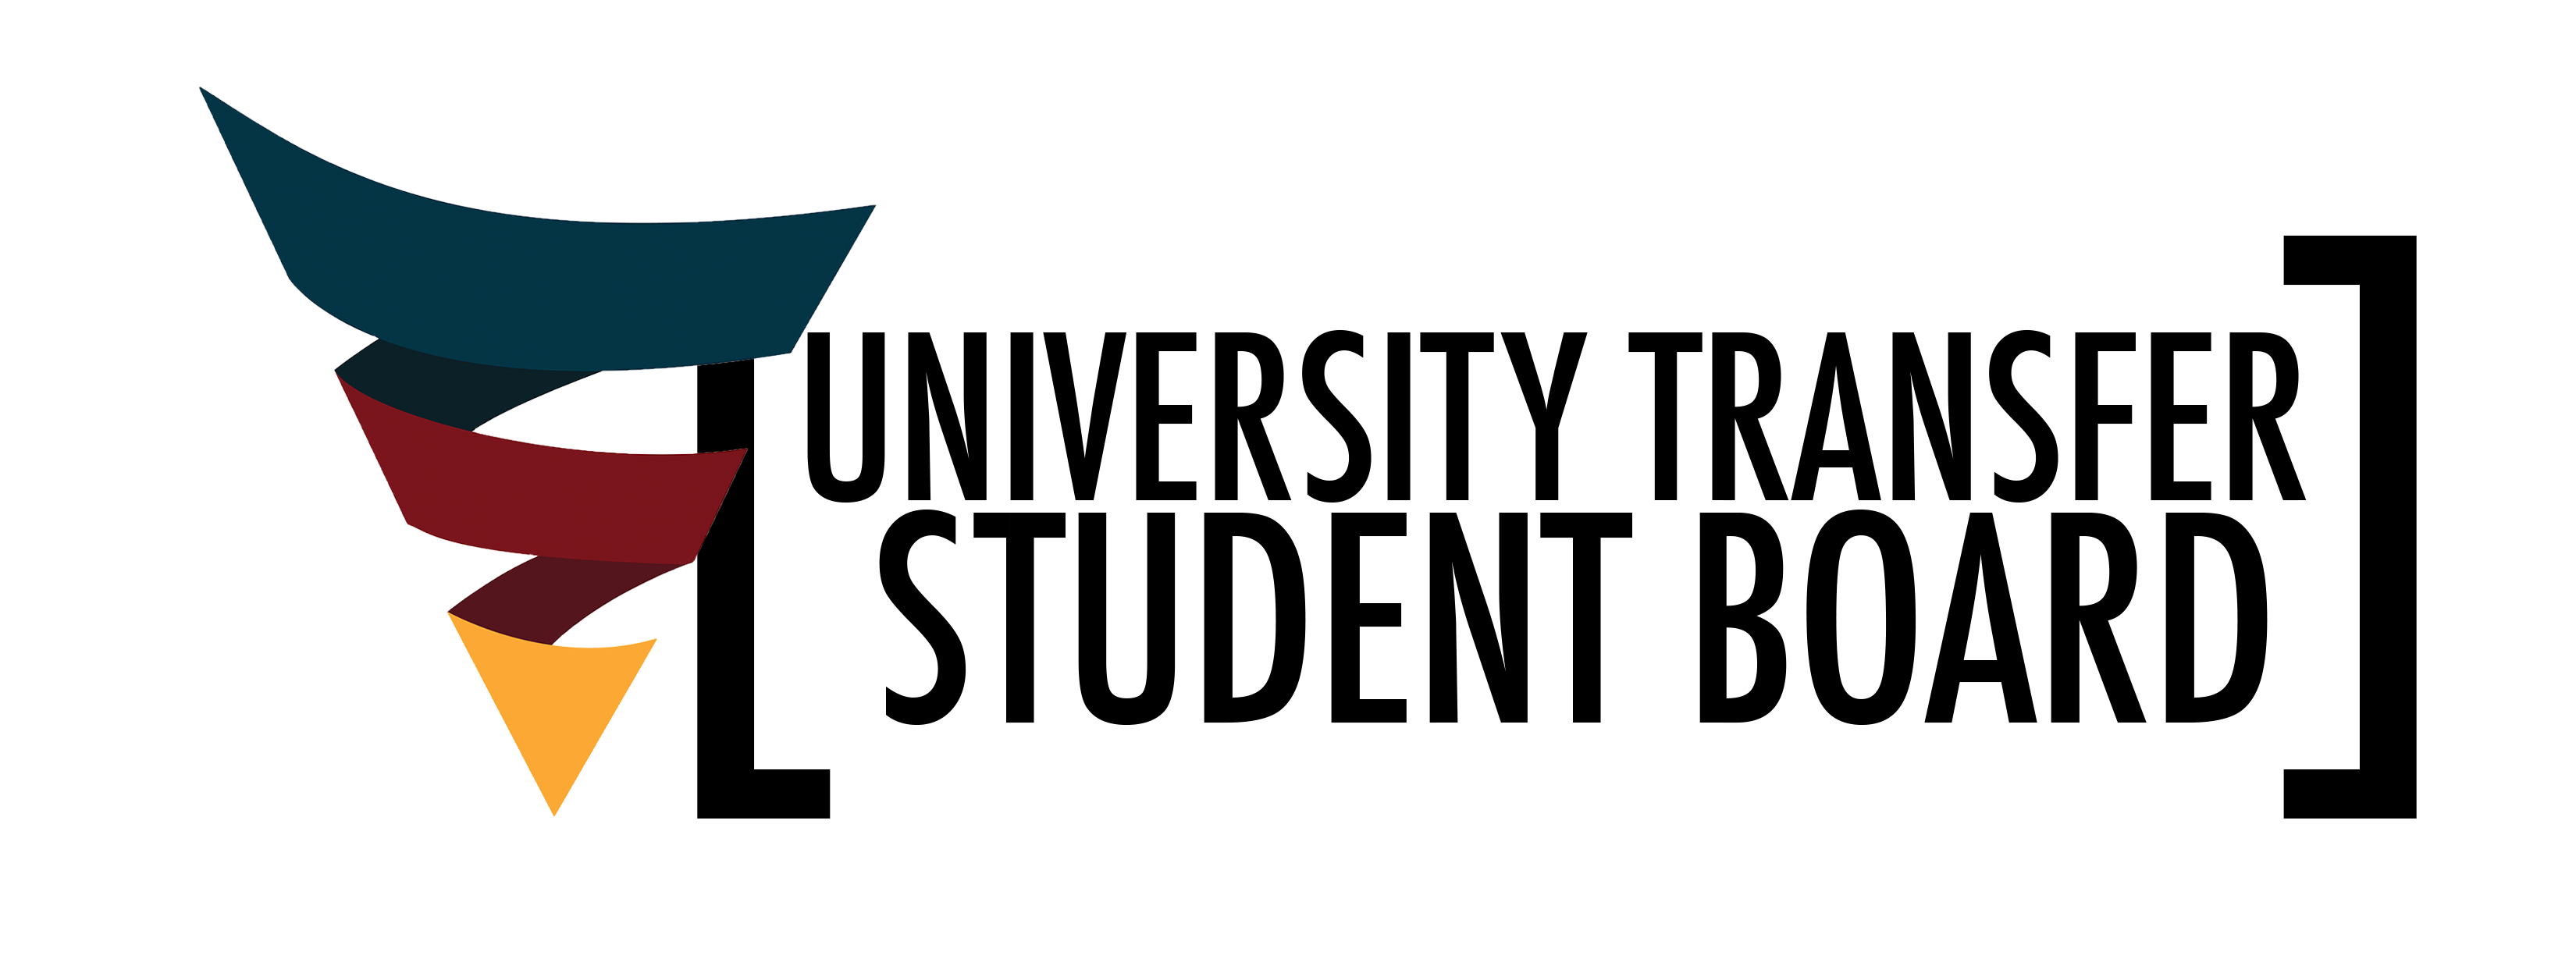 University Transfer Student Board logo